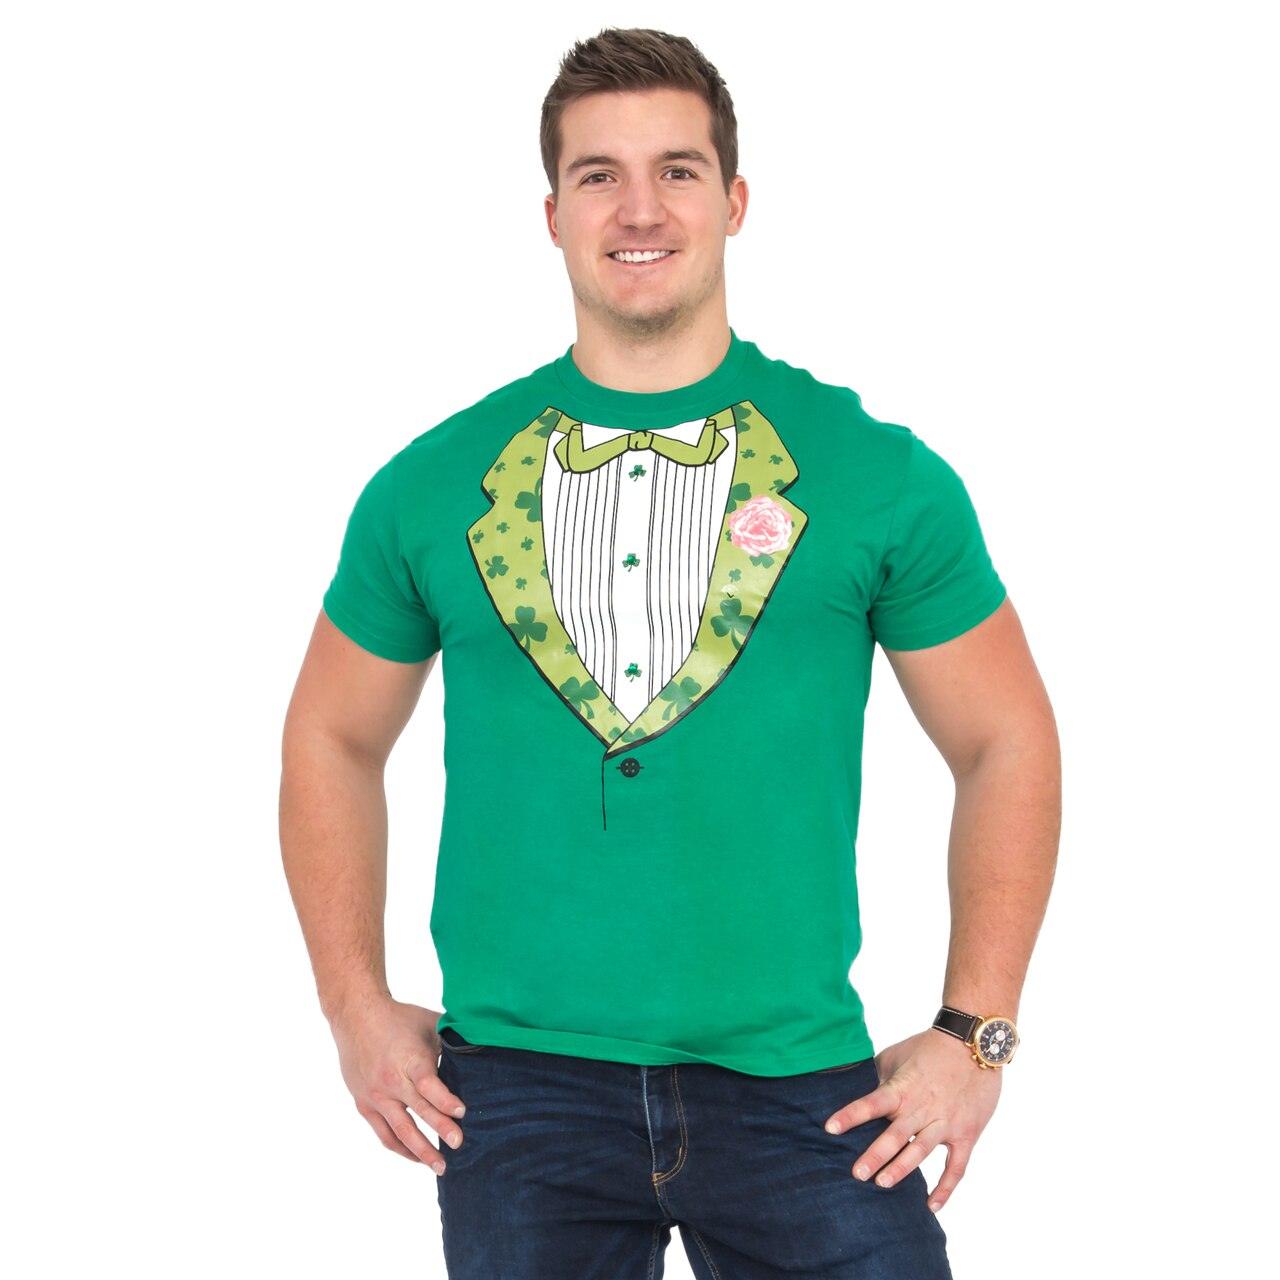 Irish Gifts, St Patrick's Day Clothing & Ireland Souvenirs